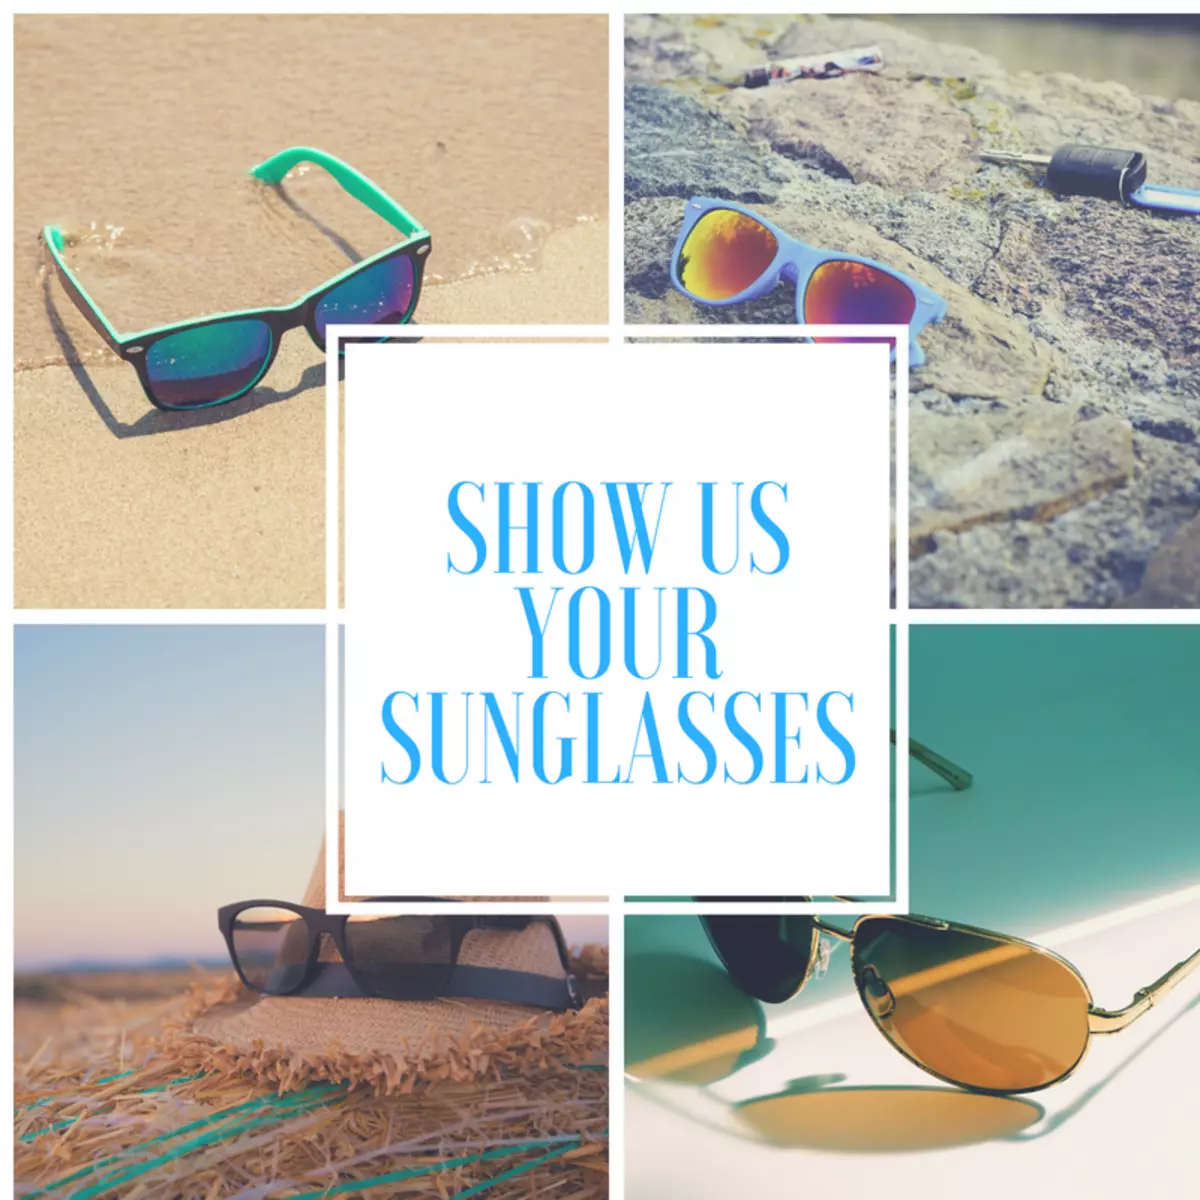 Jv Joe Celebrates National Sunglasses Day Everyday, Do You?